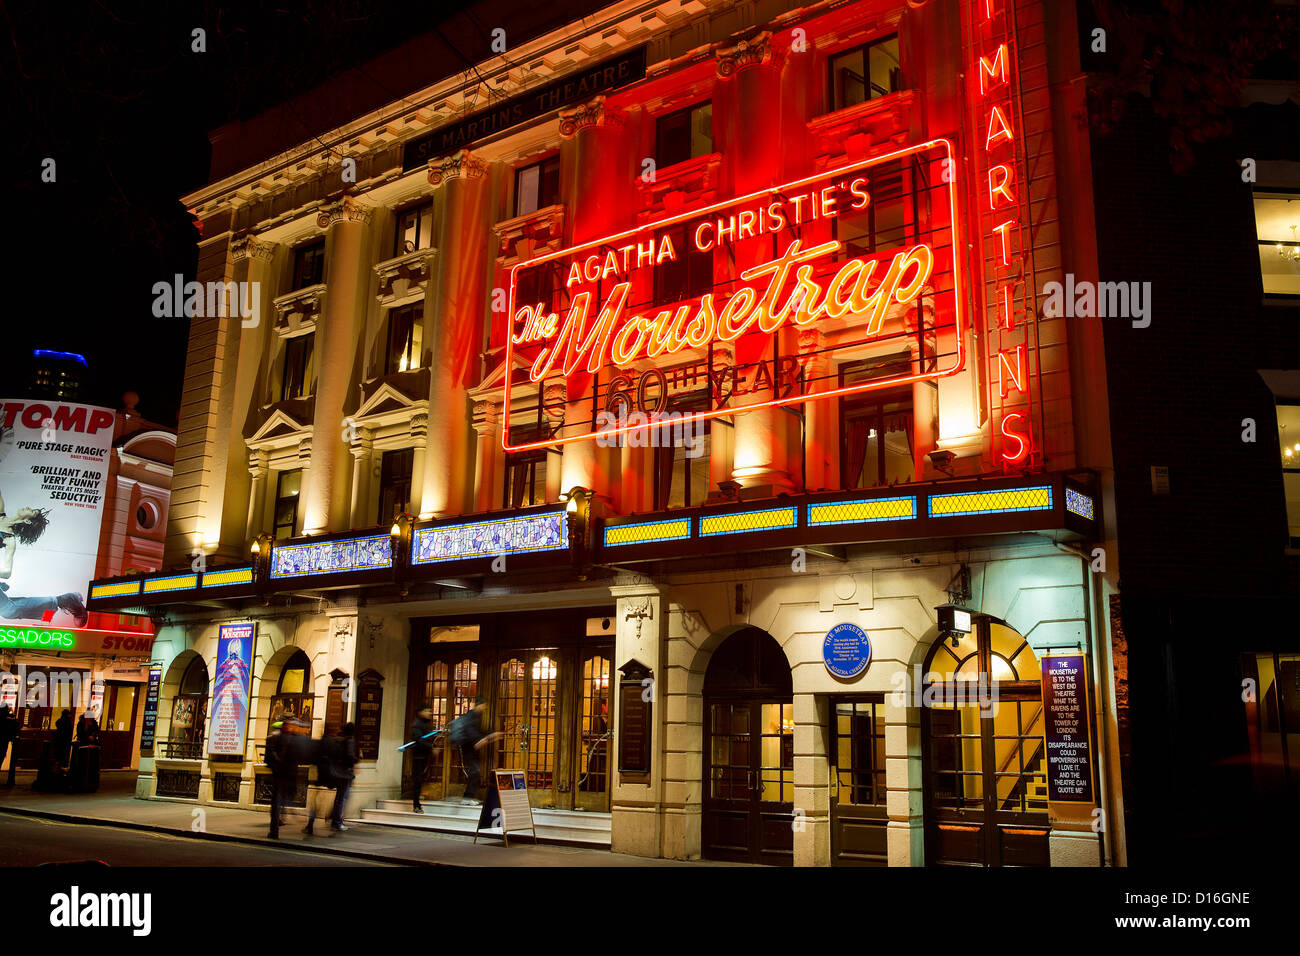 https://c8.alamy.com/comp/D16GNE/the-mouse-trap-show-at-the-st-martins-theatre-in-london-D16GNE.jpg